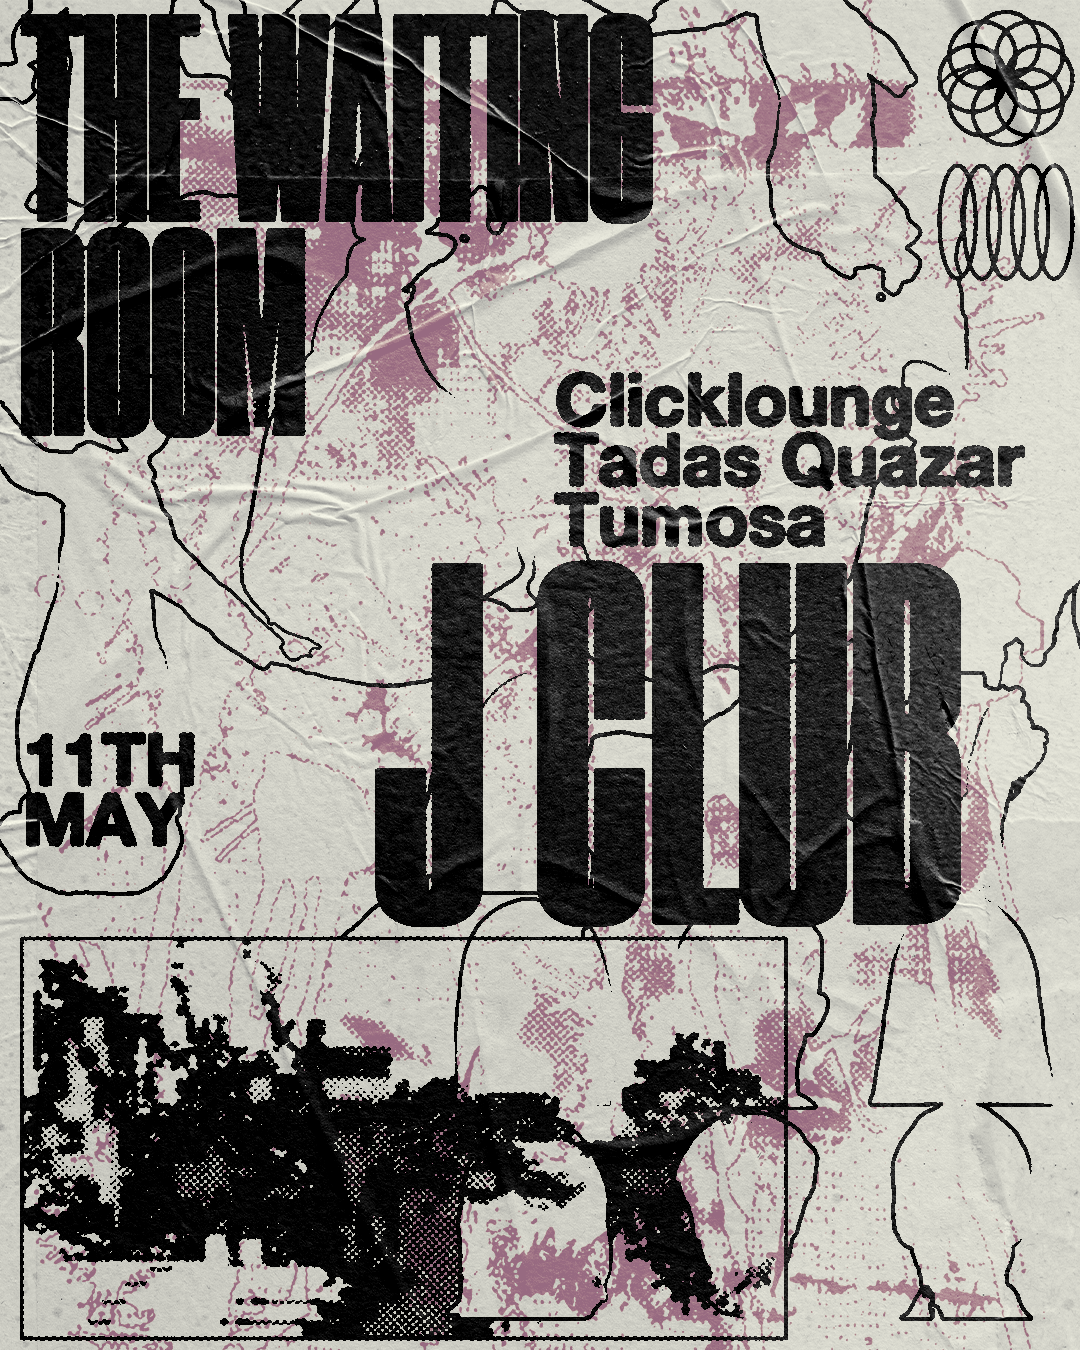 J CLUB with Clicklounge + Tadas Quazar + Tumosa - Página trasera